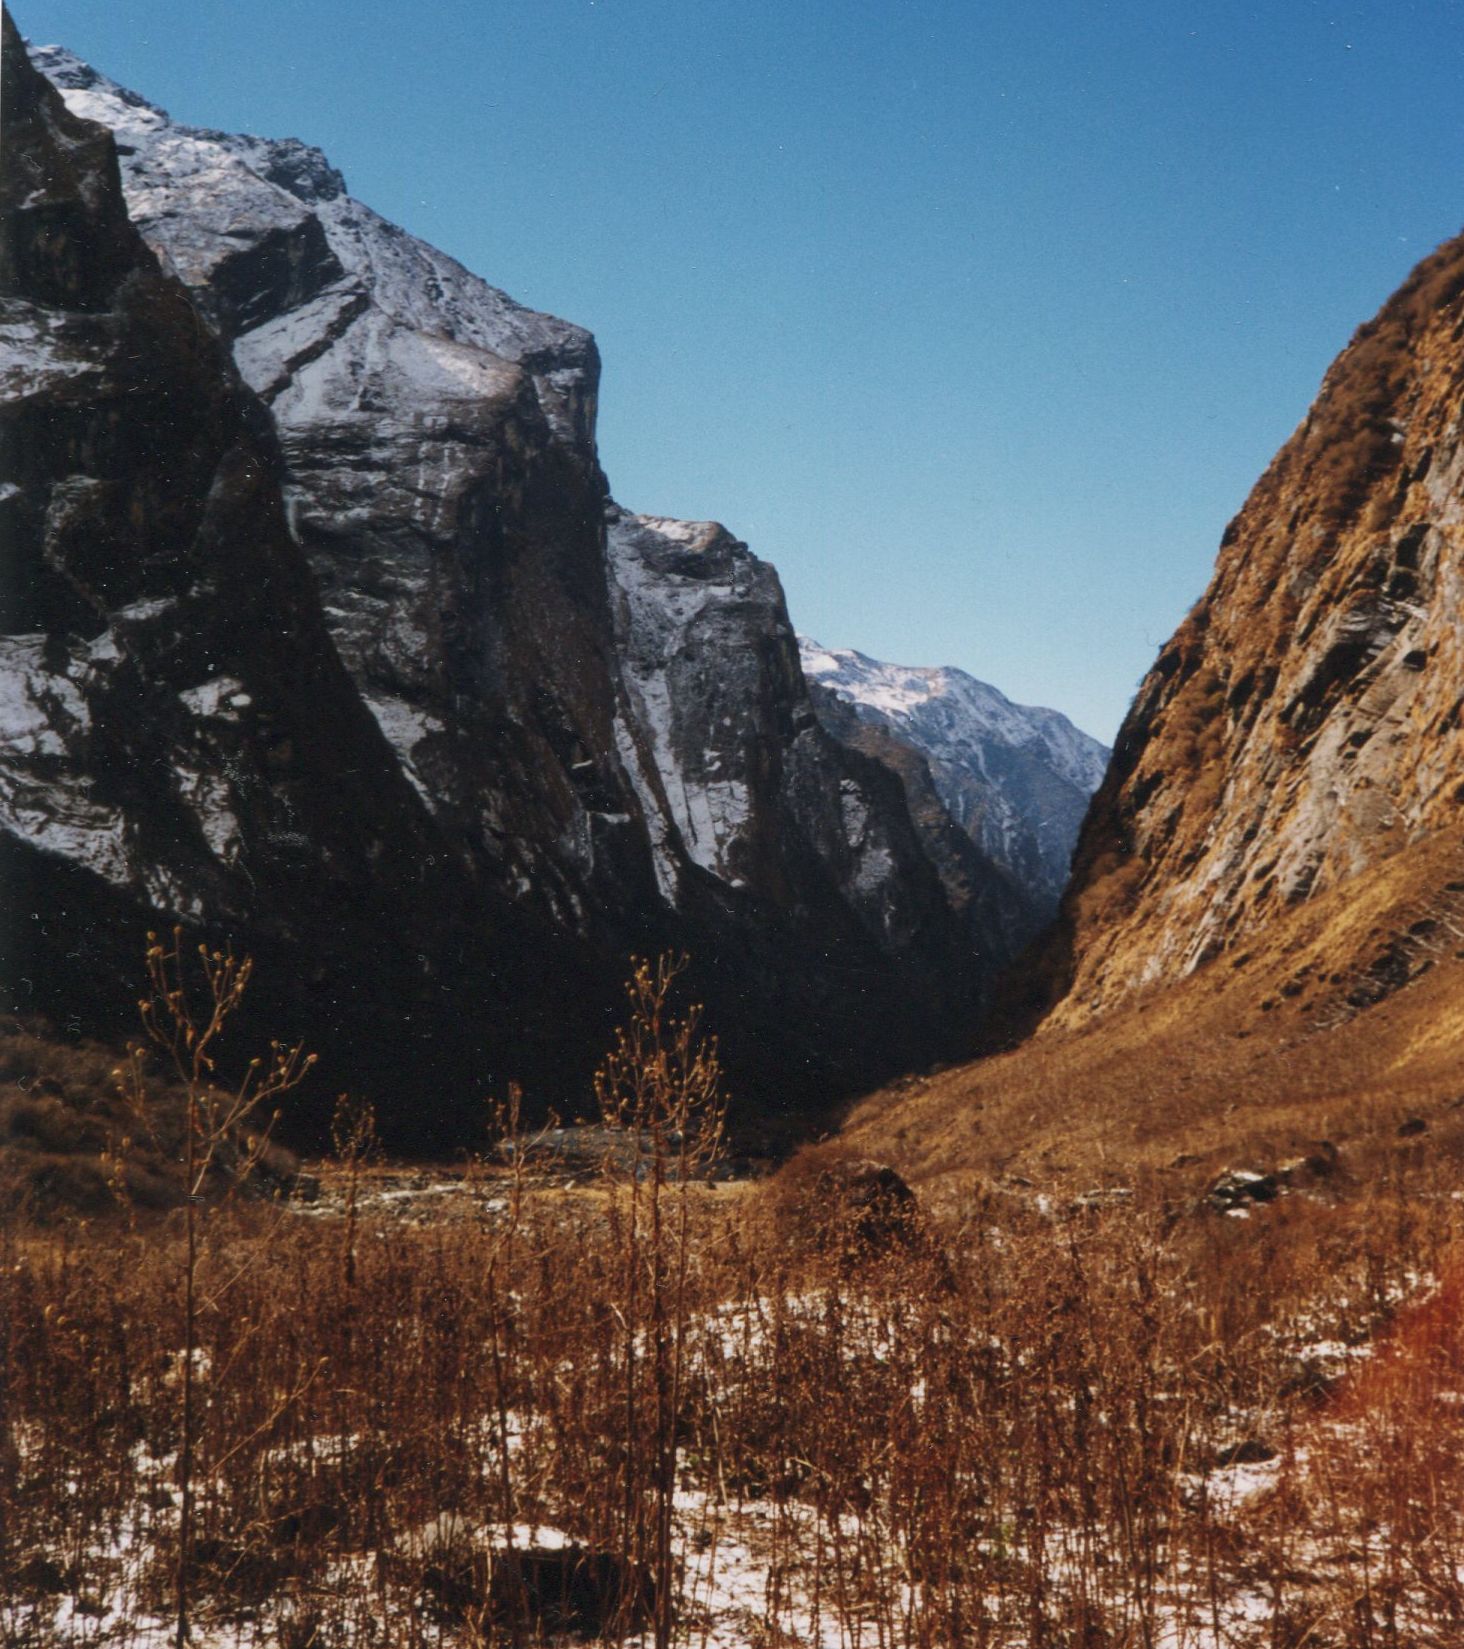 The Gates in the Modi Khola Valley of the Annapurna Sanctuary